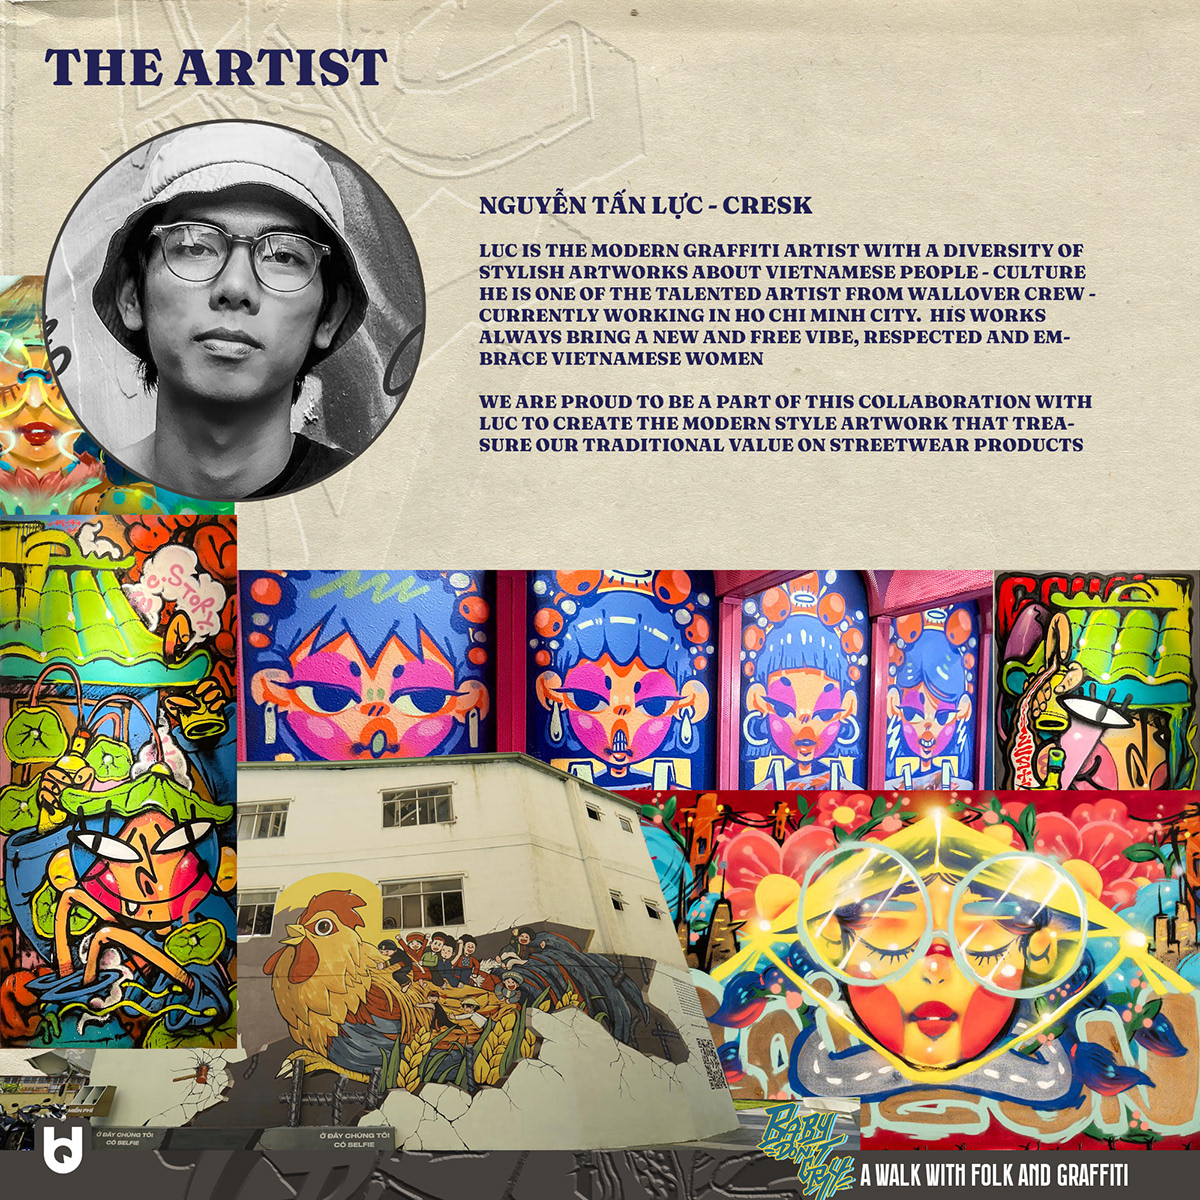 About Artist Nguyen Tan Luc - Cresk